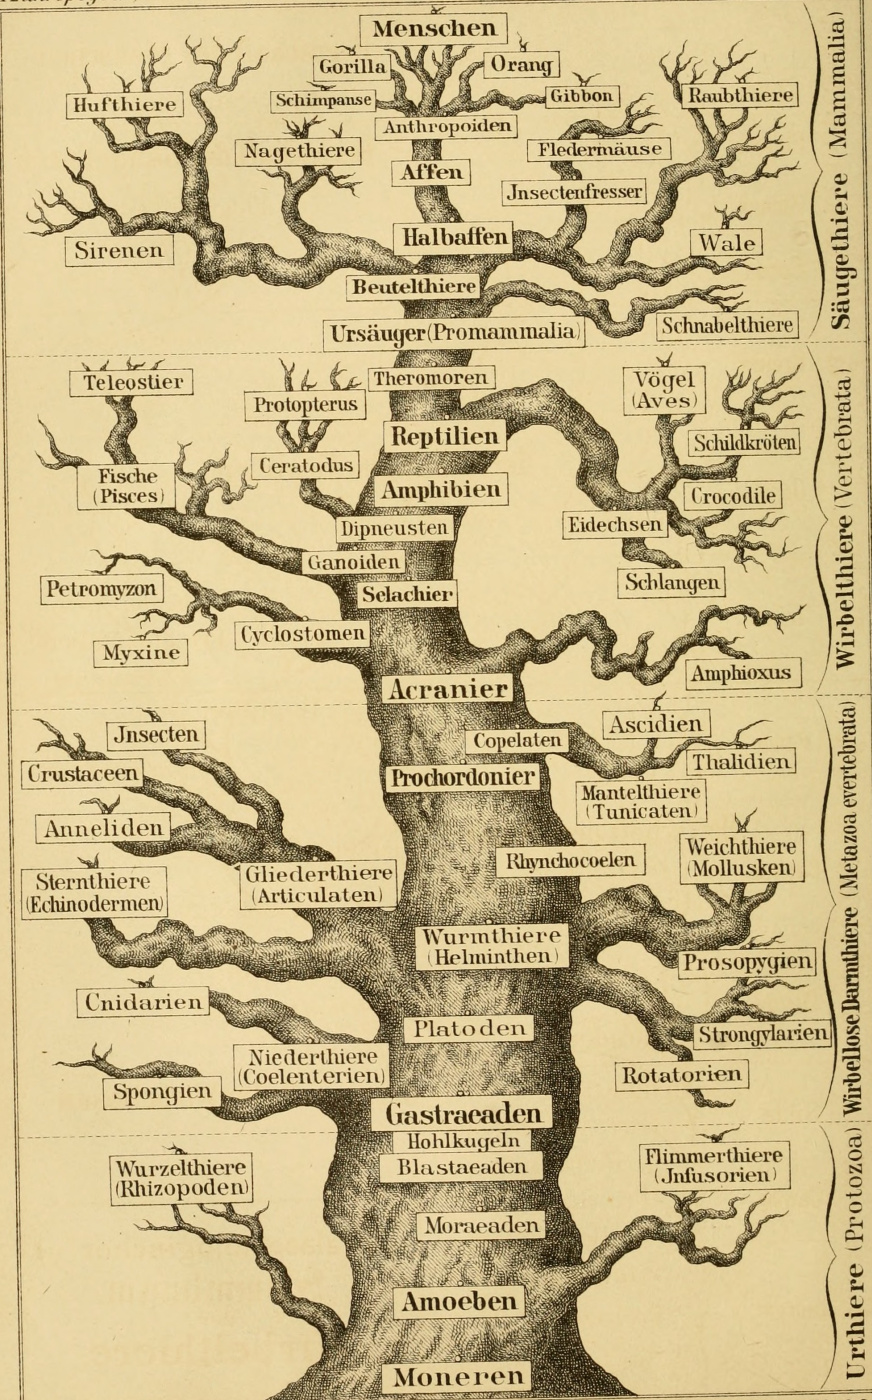 Ernst Heinrich Haeckel. Généalogie "Anthropologie et développement humain"